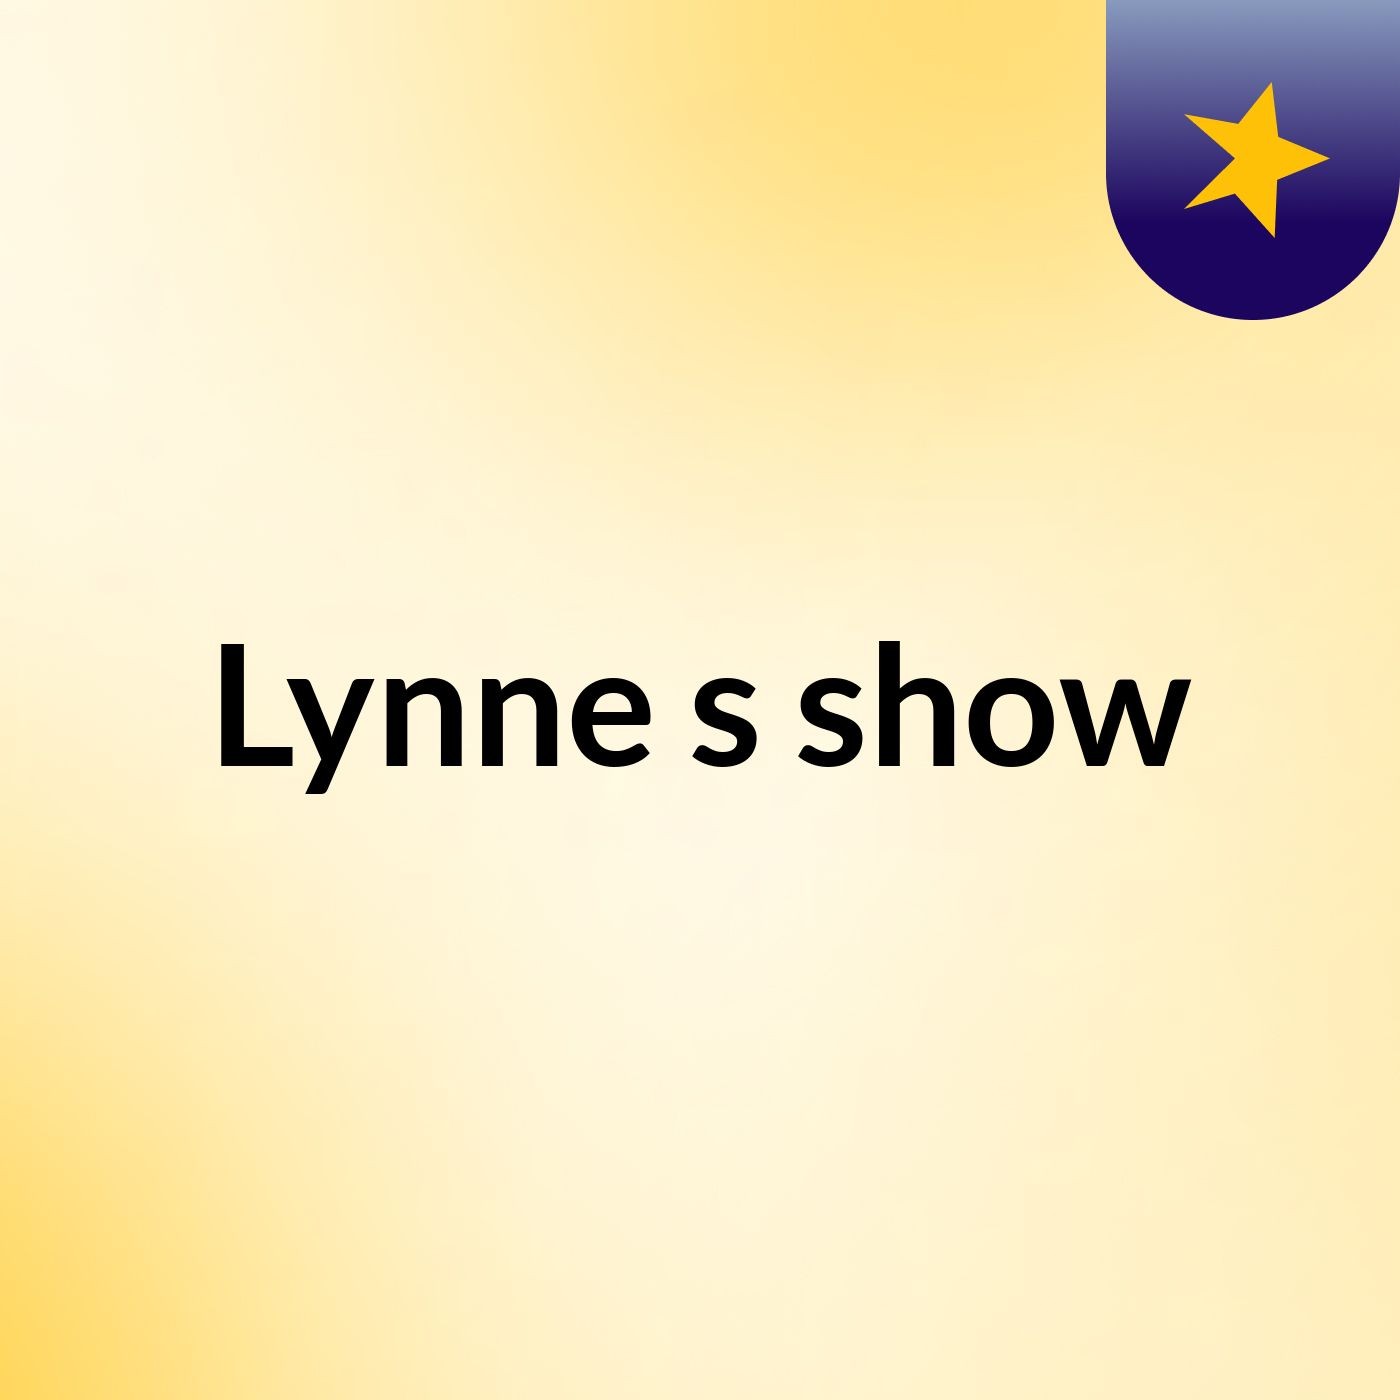 Lynne's show